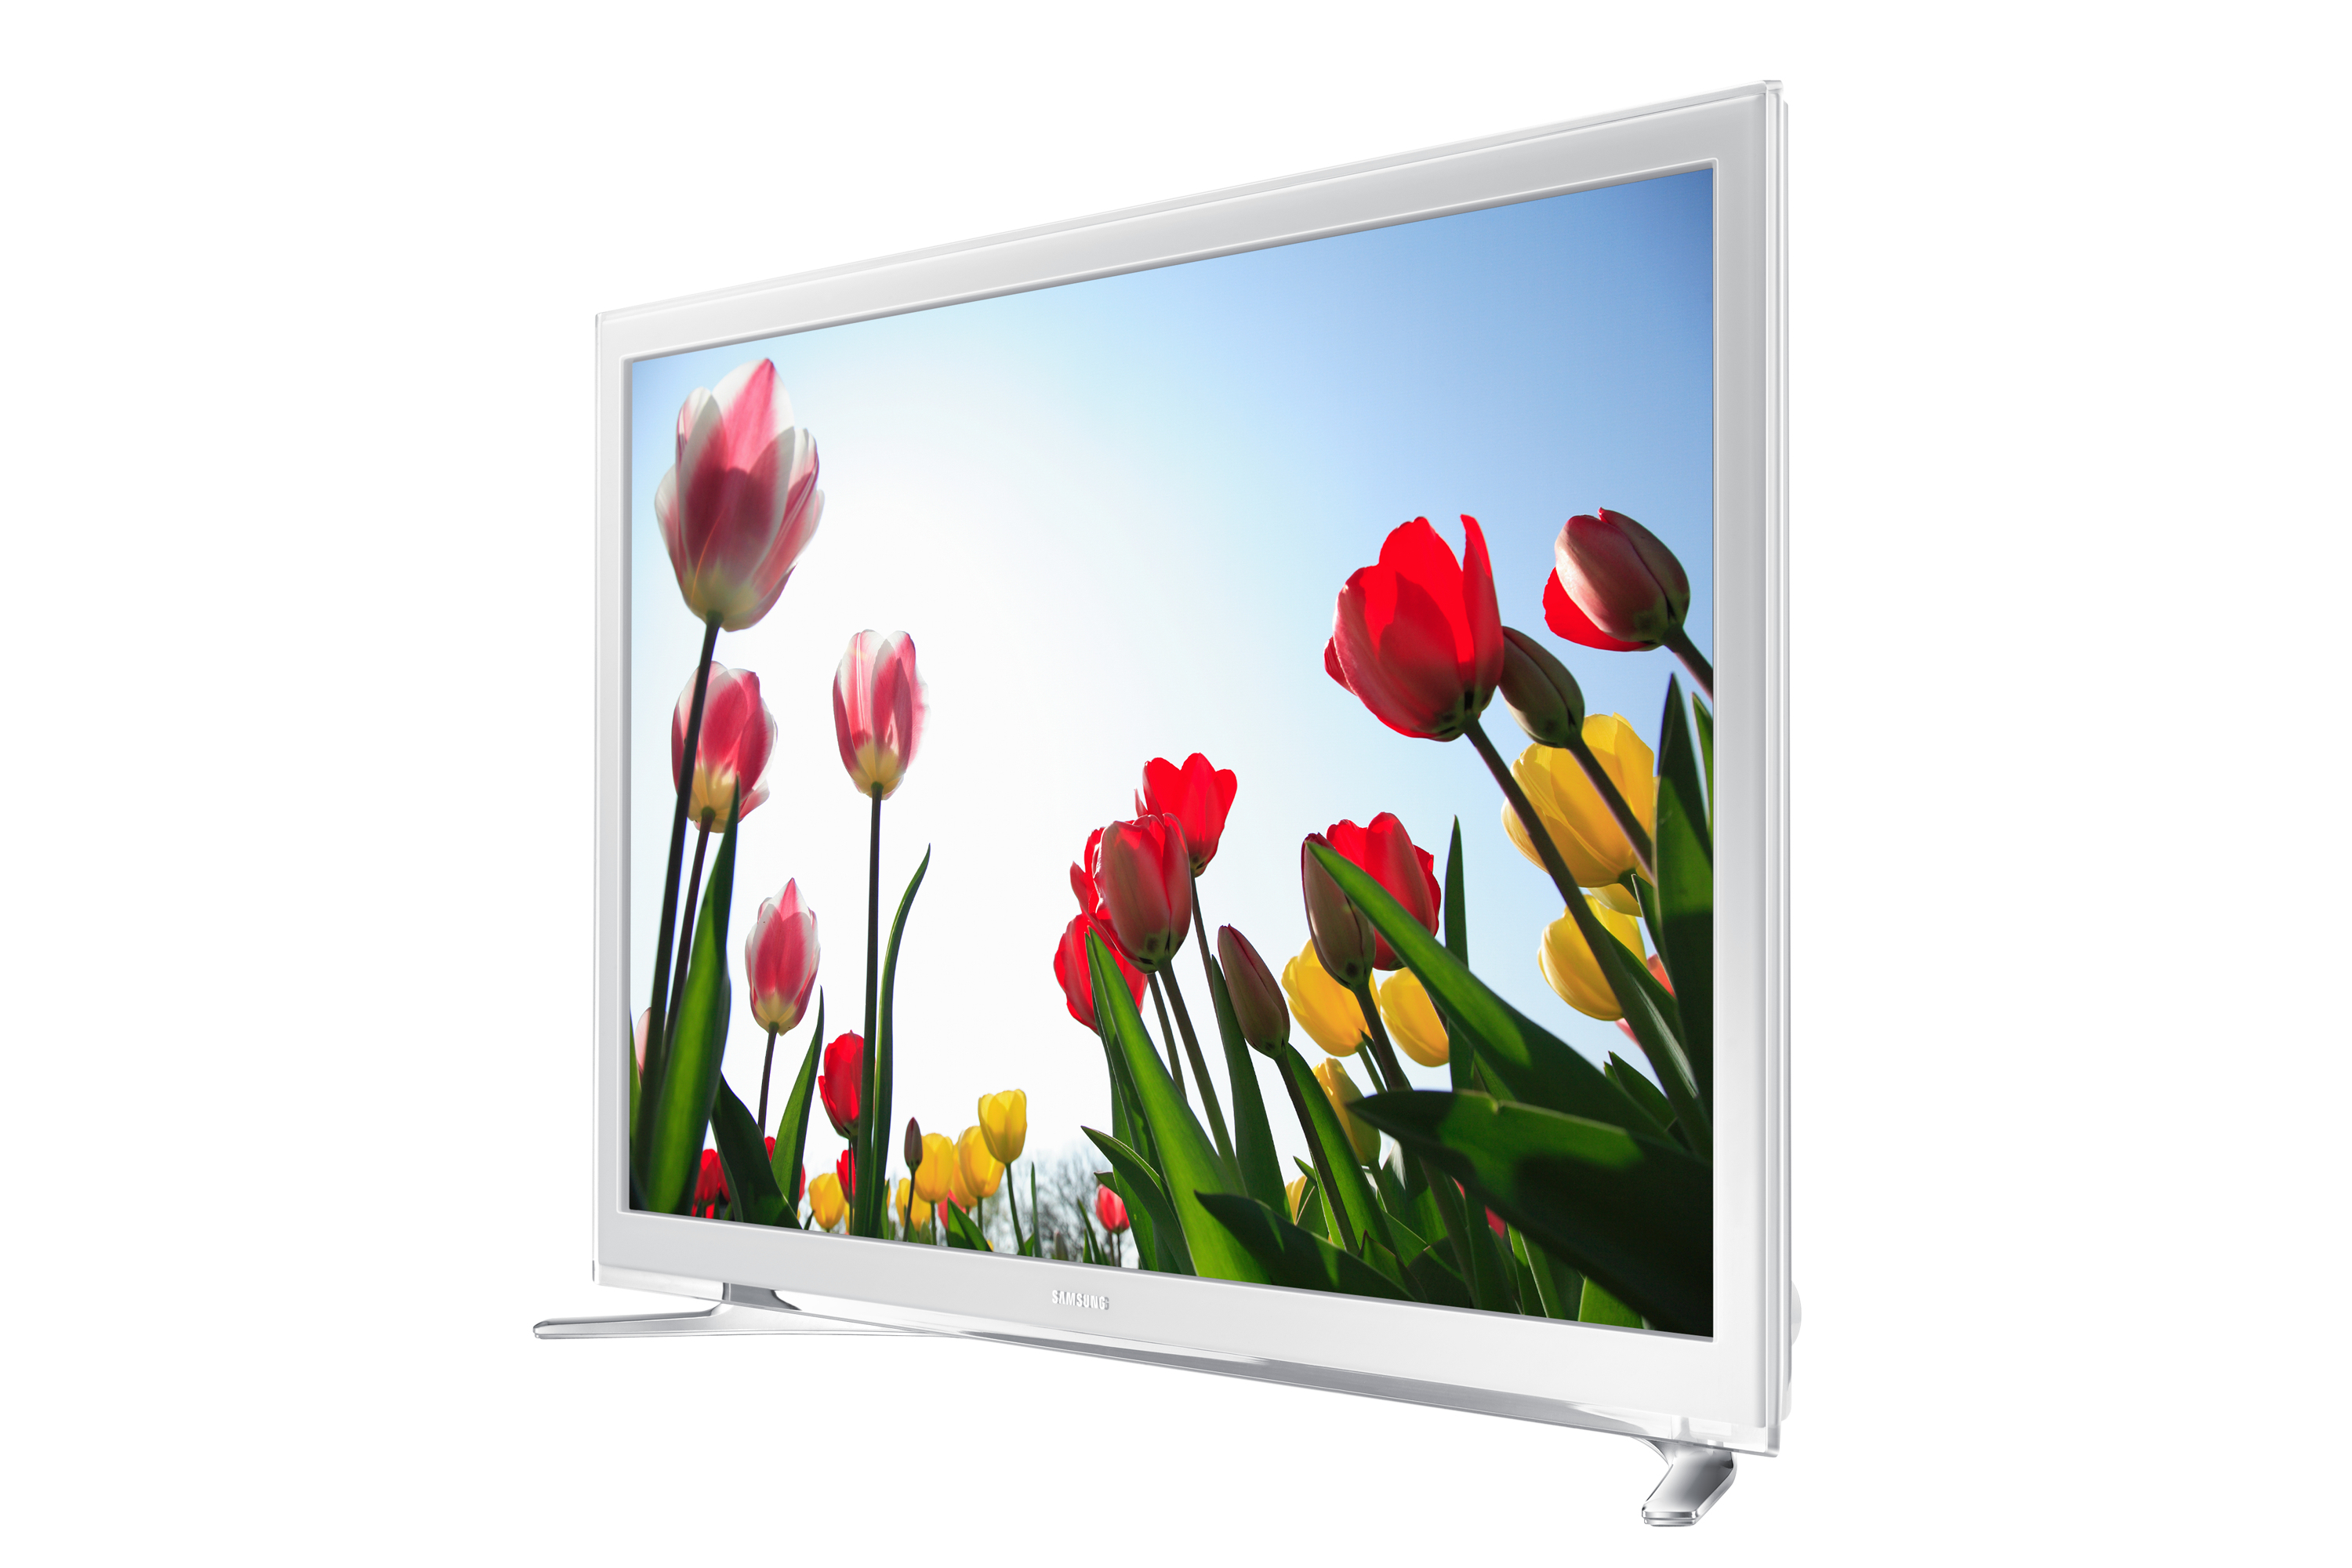 Купить телевизора магазинах спб. Samsung ue32h4510. Samsung Smart TV 32 дюйма белый. Samsung ue22f5410. 22h5610samsung.